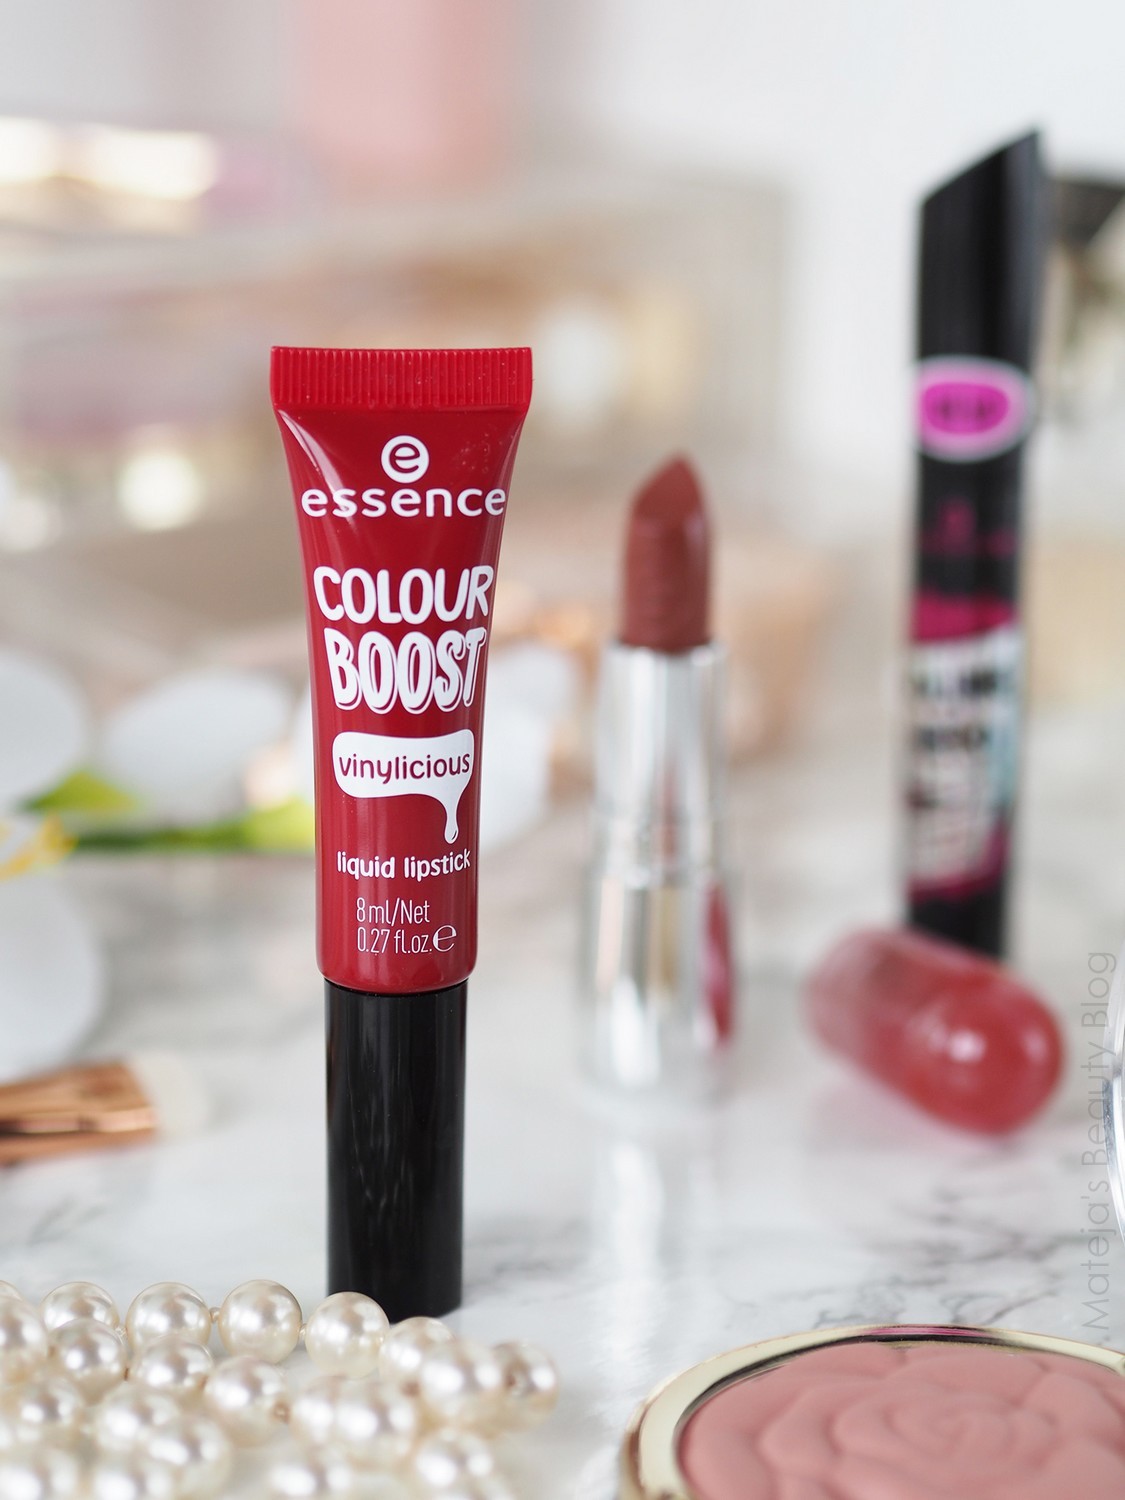 Essence Colour Boost Vinlylicious Liquid Lipstick